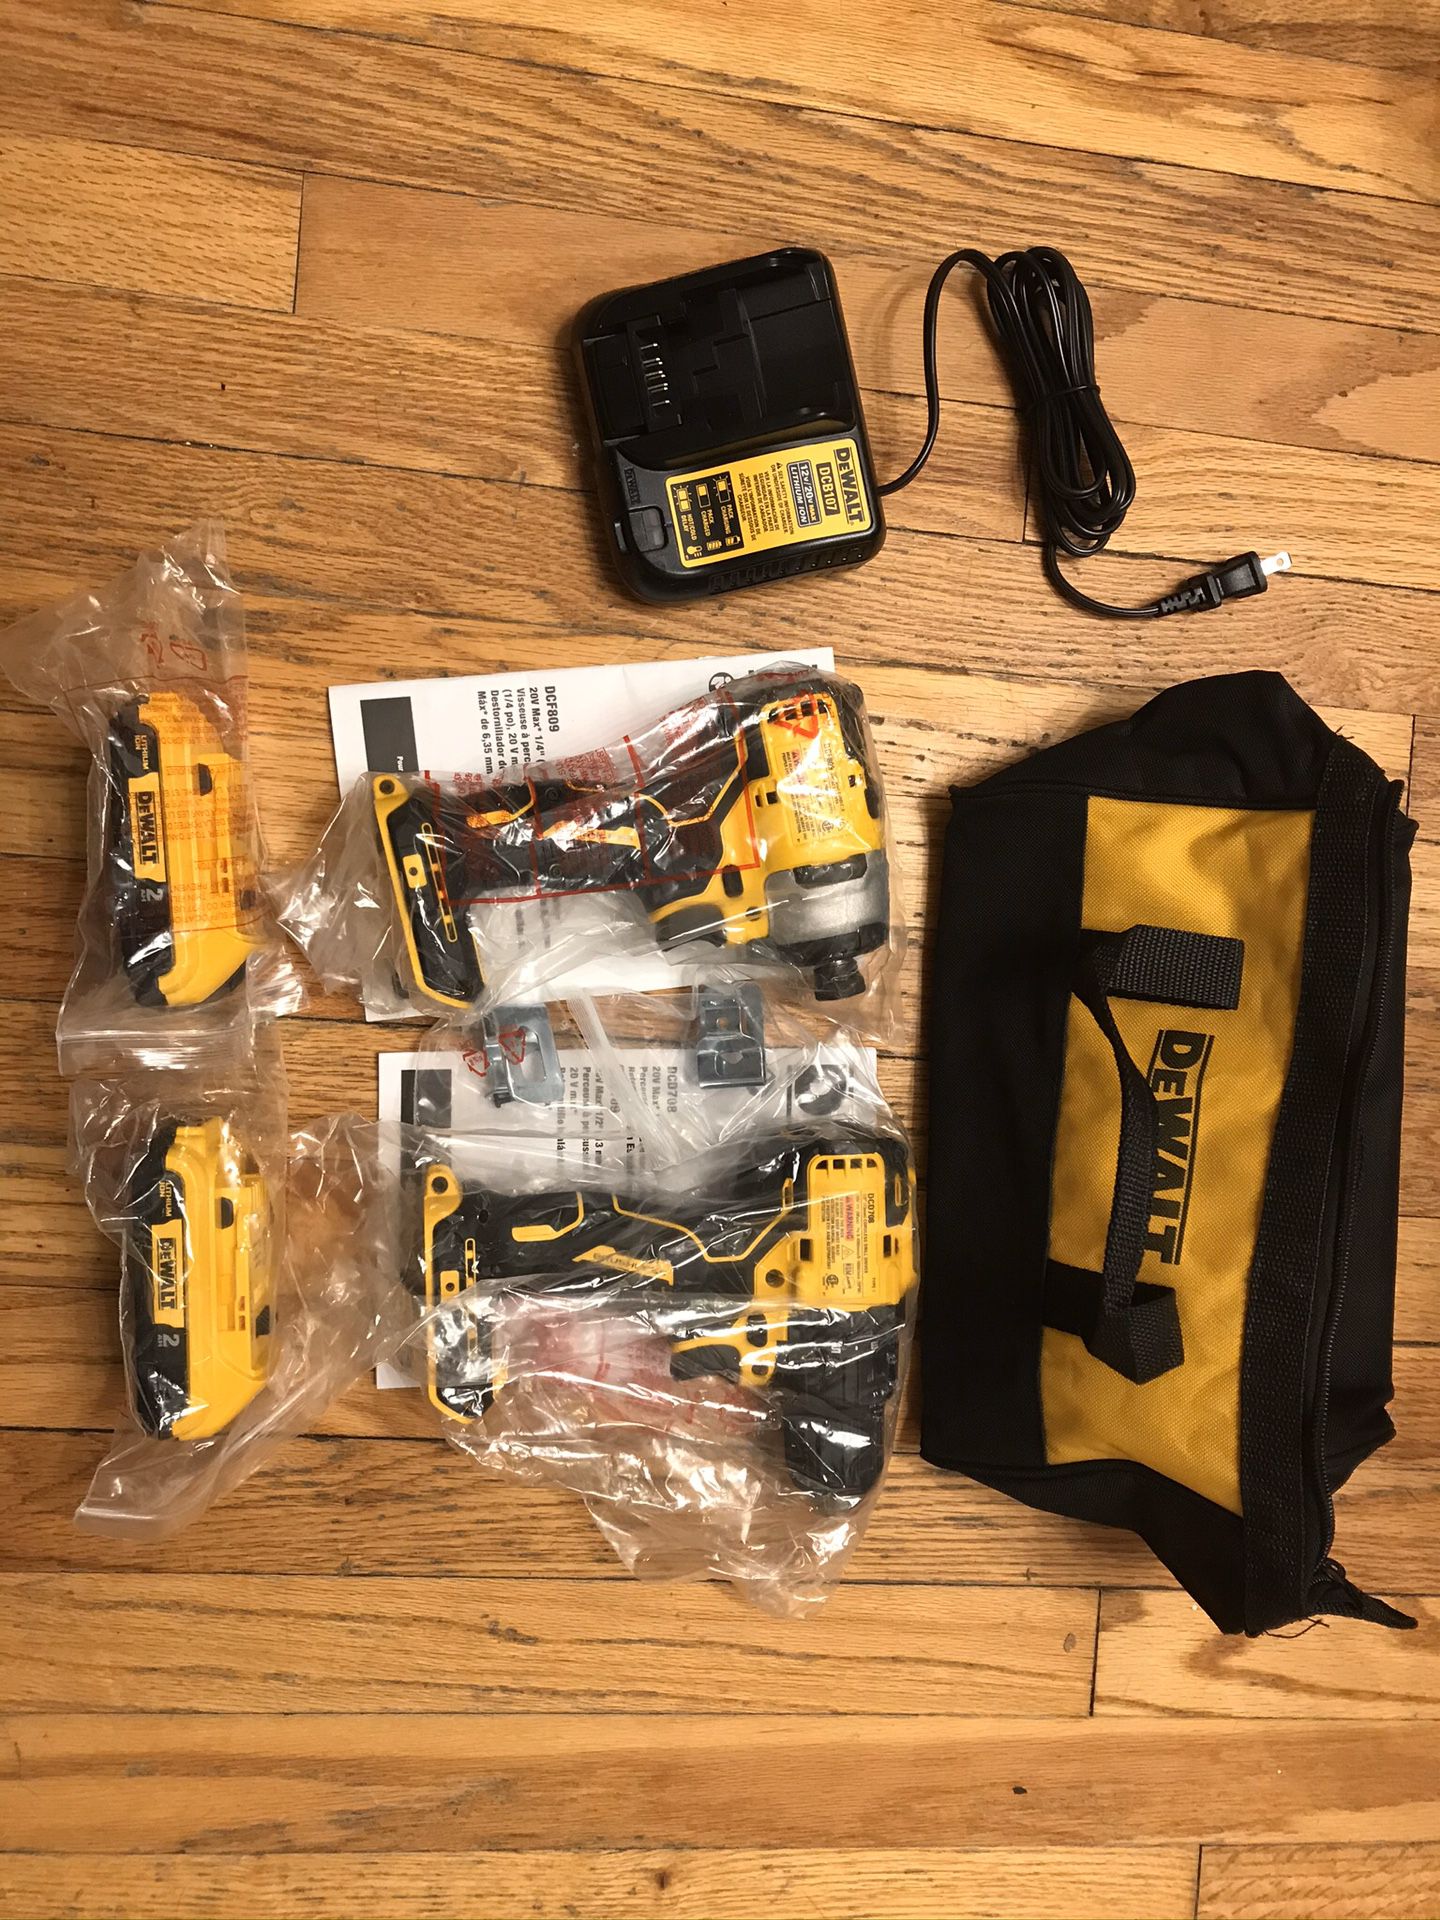 NEW Dewalt atomic drill/driver kit with 2.0 batteries